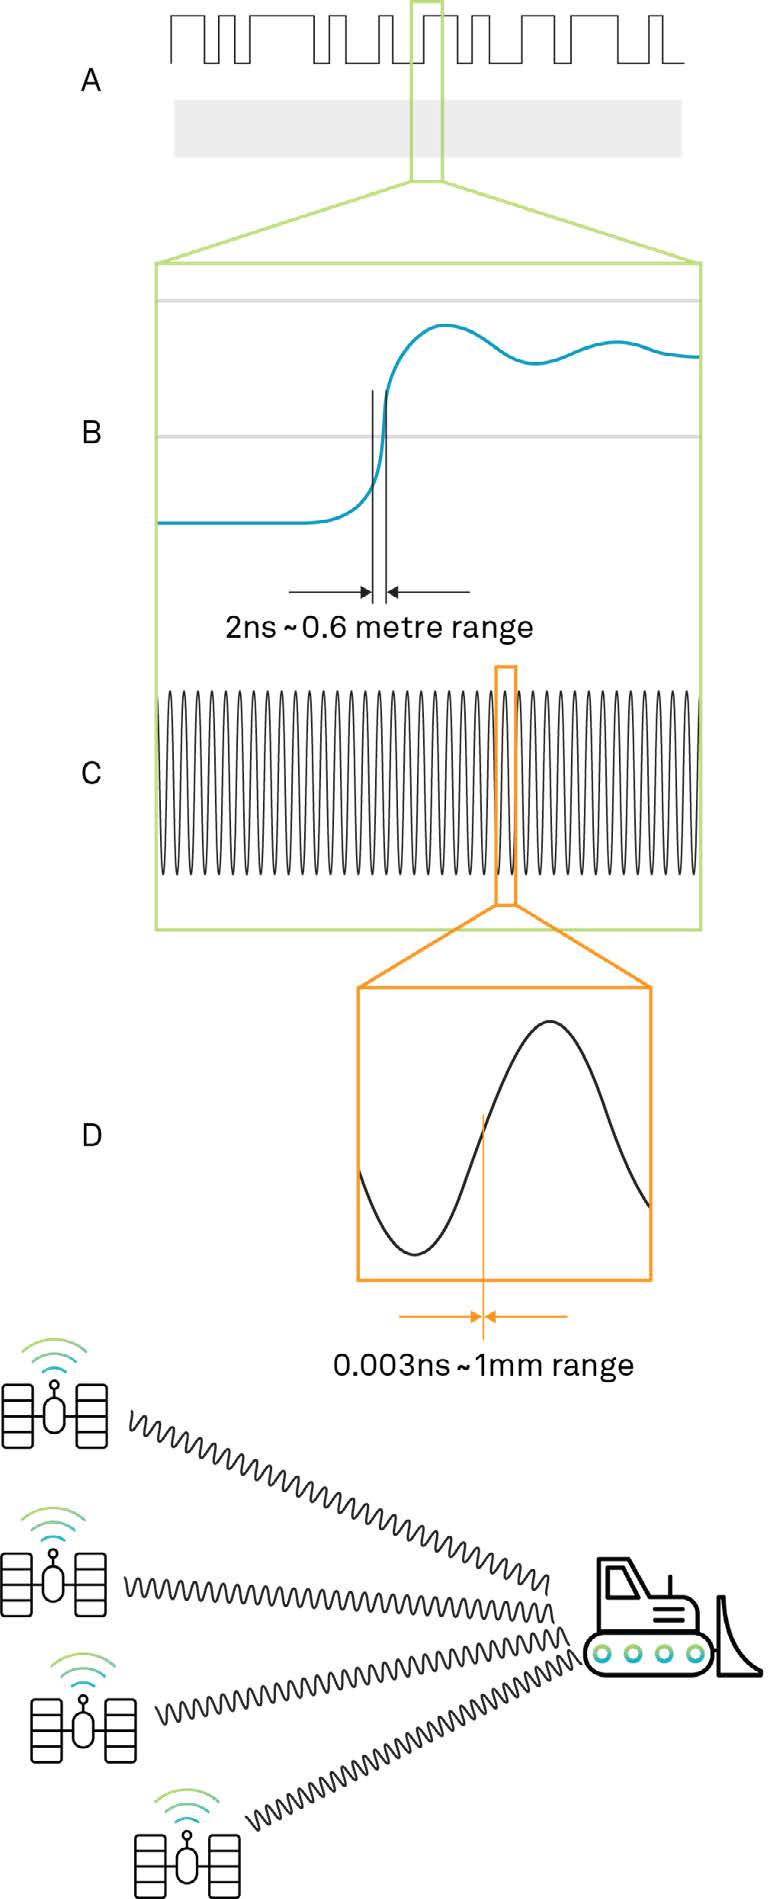 Figure 40 Pseudorange vs carrier phase